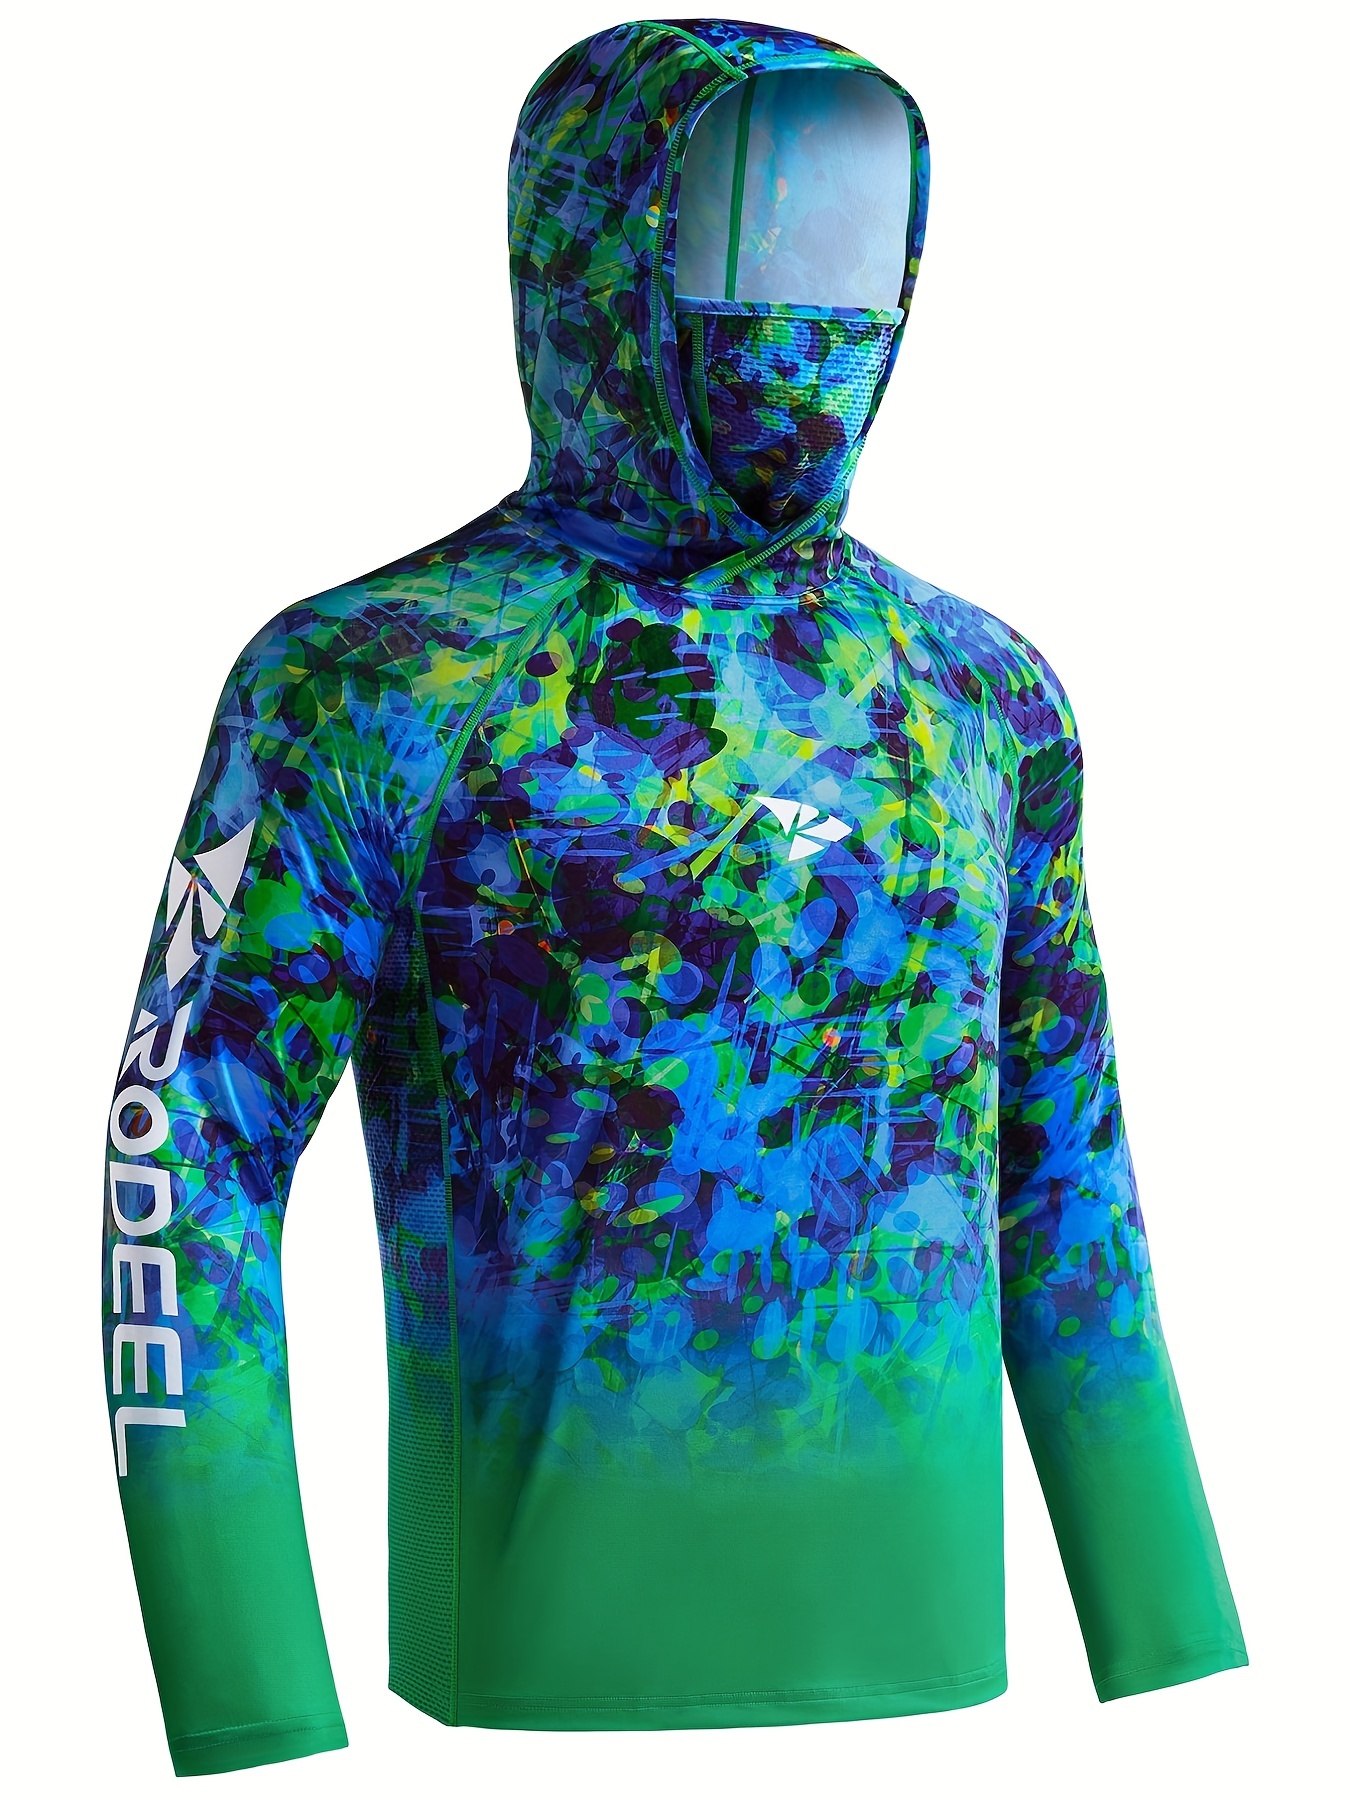 GetUSCart- Performance Fishing Shirt Men UPF 50 UV Sun Protection Long  Sleeve Quick Dry Mesh Cooling Rash Guard Kryptek Loose Fit Light Blue Large